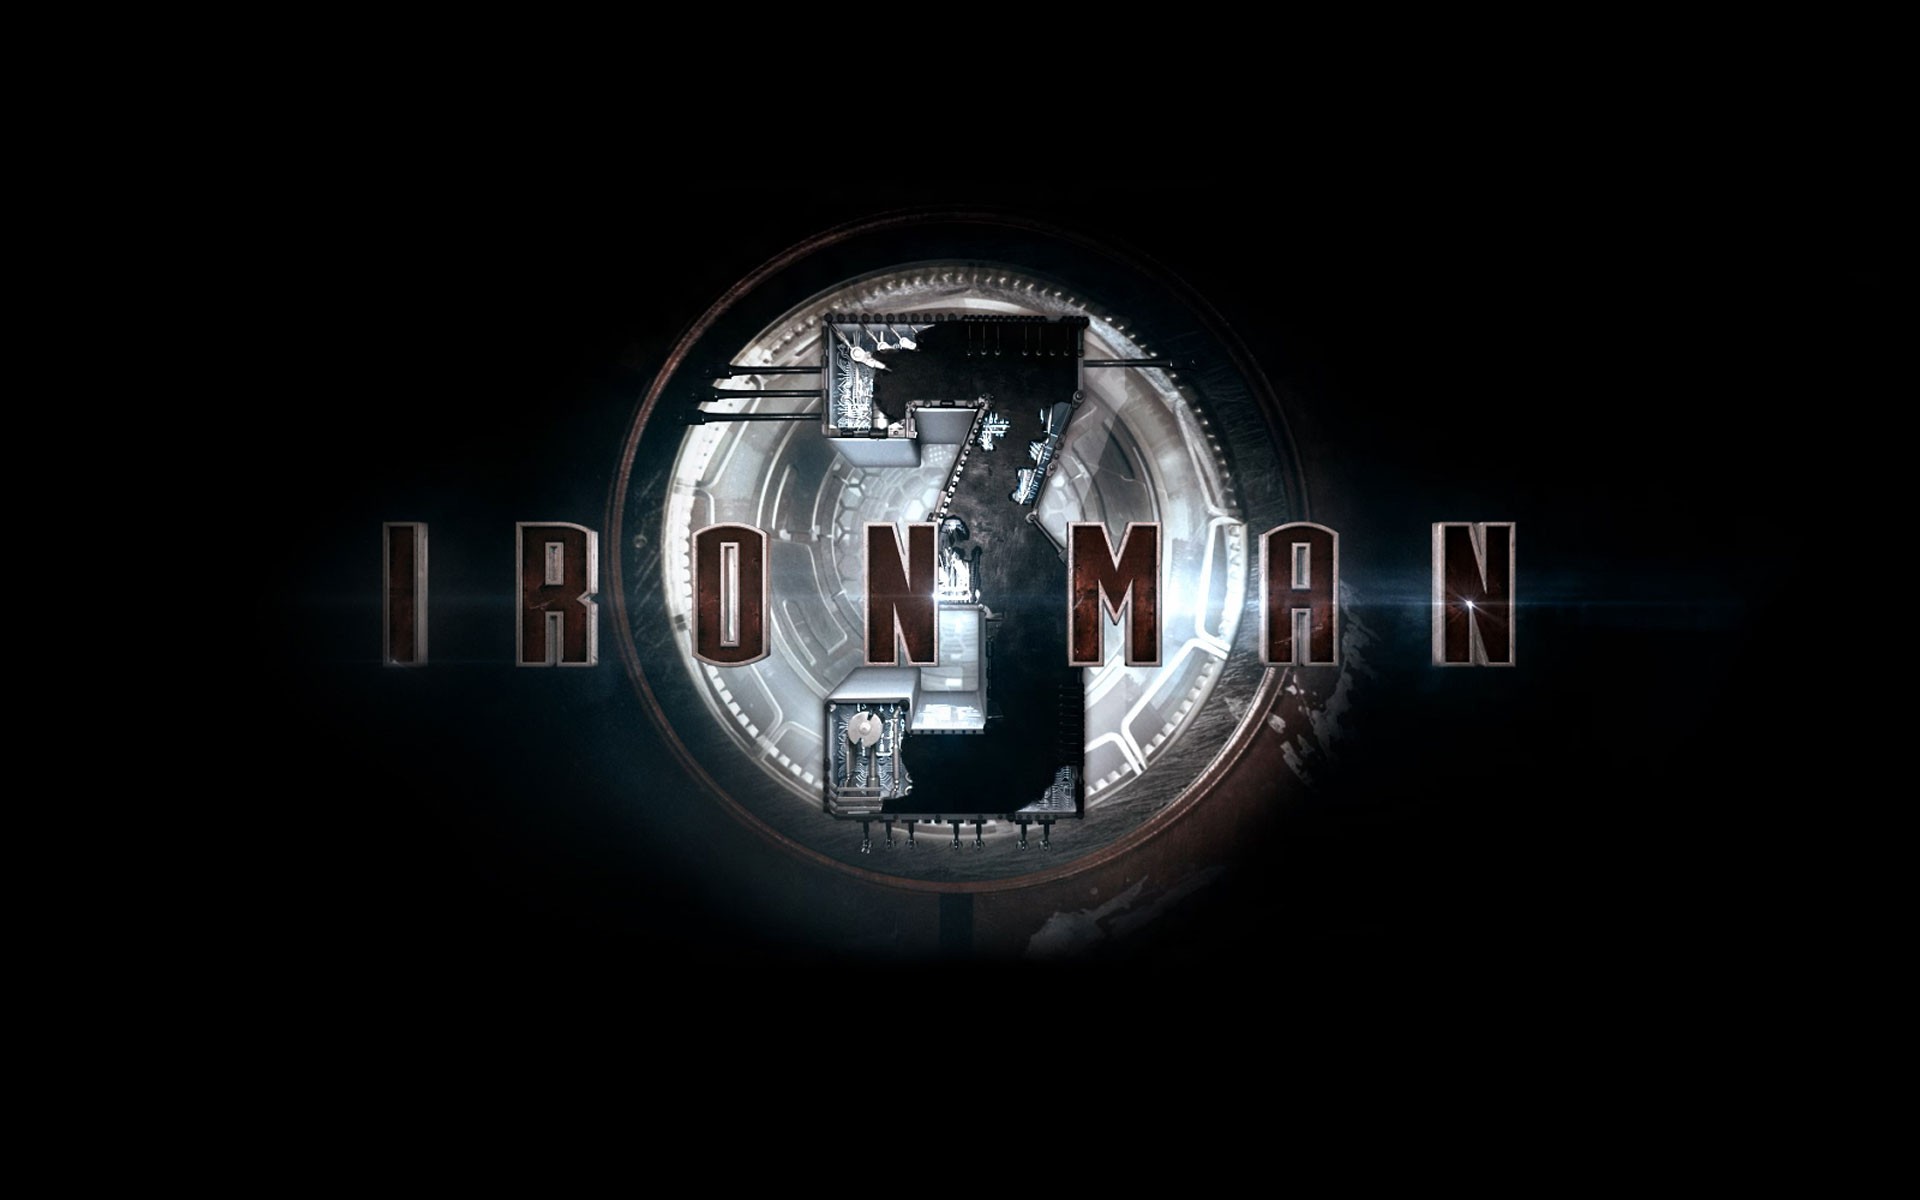 Iron Man Trailer Wallpaper